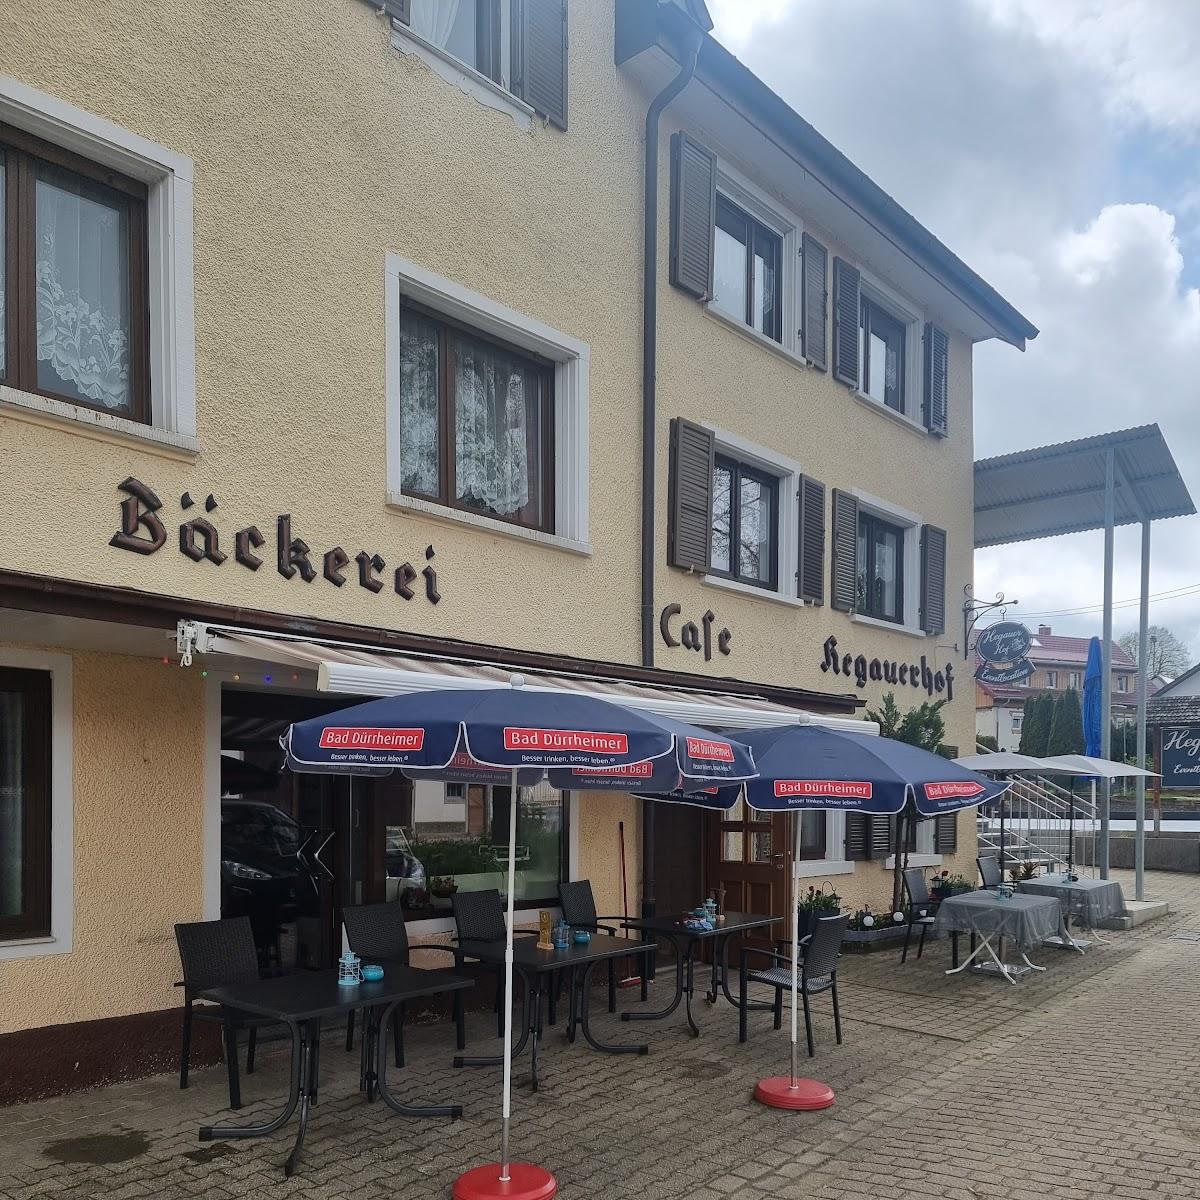 Restaurant "Yildirim Grillhaus" in Blumberg